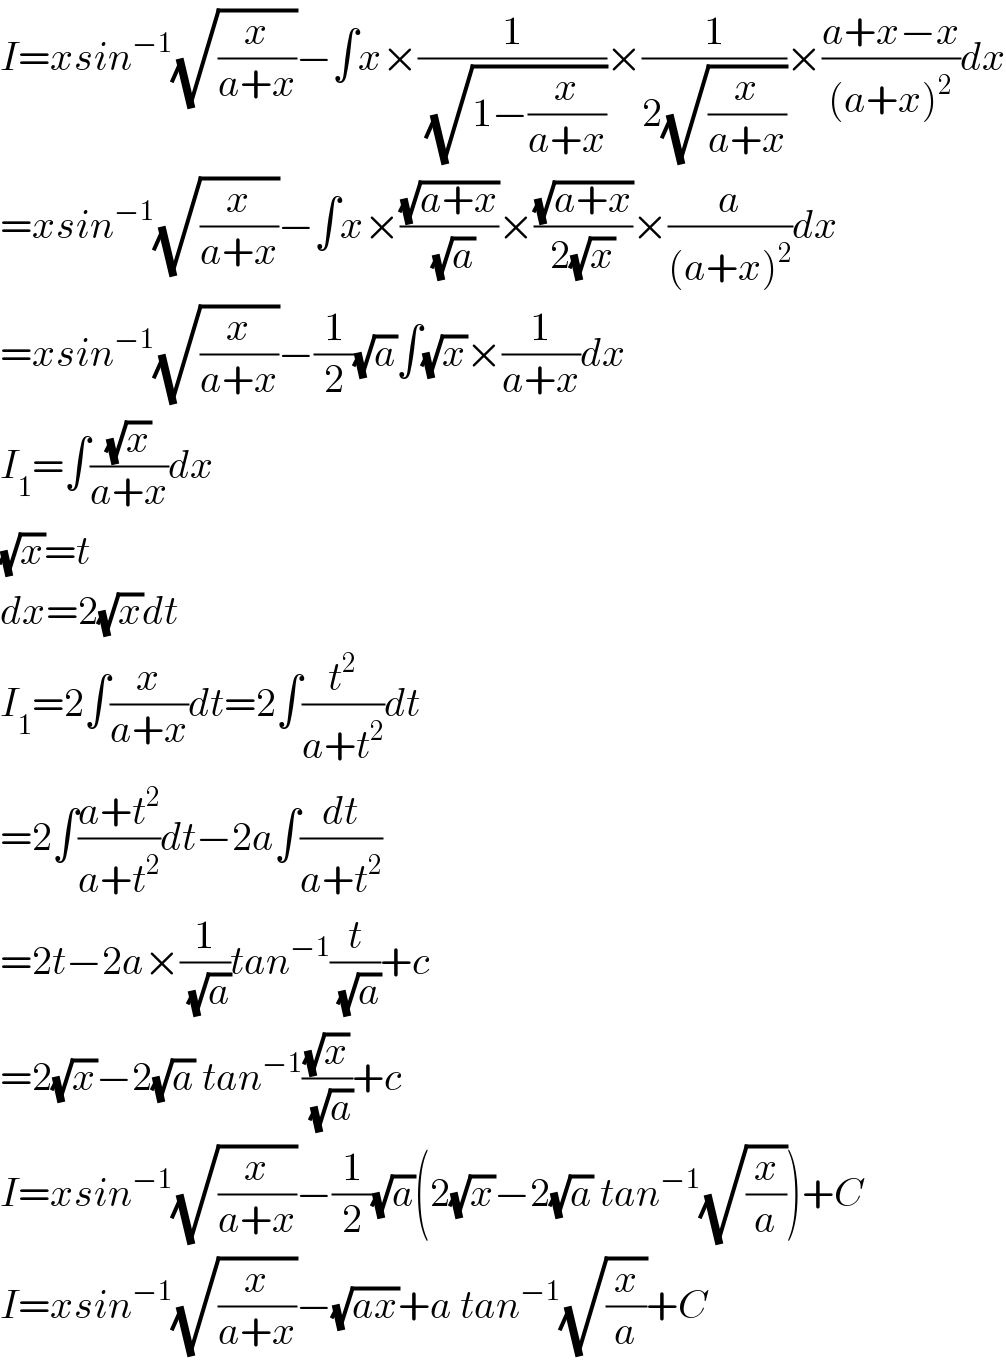 I=xsin^(−1) (√(x/(a+x)))−∫x×(1/(√(1−(x/(a+x)))))×(1/(2(√(x/(a+x)))))×((a+x−x)/((a+x)^2 ))dx  =xsin^(−1) (√(x/(a+x)))−∫x×((√(a+x))/(√a))×((√(a+x))/(2(√x)))×(a/((a+x)^2 ))dx  =xsin^(−1) (√(x/(a+x)))−(1/2)(√a)∫(√x)×(1/(a+x))dx  I_1 =∫((√x)/(a+x))dx  (√x)=t  dx=2(√x)dt  I_1 =2∫(x/(a+x))dt=2∫(t^2 /(a+t^2 ))dt  =2∫((a+t^2 )/(a+t^2 ))dt−2a∫(dt/(a+t^2 ))  =2t−2a×(1/(√a))tan^(−1) (t/(√a))+c  =2(√x)−2(√a) tan^(−1) ((√x)/(√a))+c  I=xsin^(−1) (√(x/(a+x)))−(1/2)(√a)(2(√x)−2(√a) tan^(−1) (√(x/a)))+C  I=xsin^(−1) (√(x/(a+x)))−(√(ax))+a tan^(−1) (√(x/a))+C  